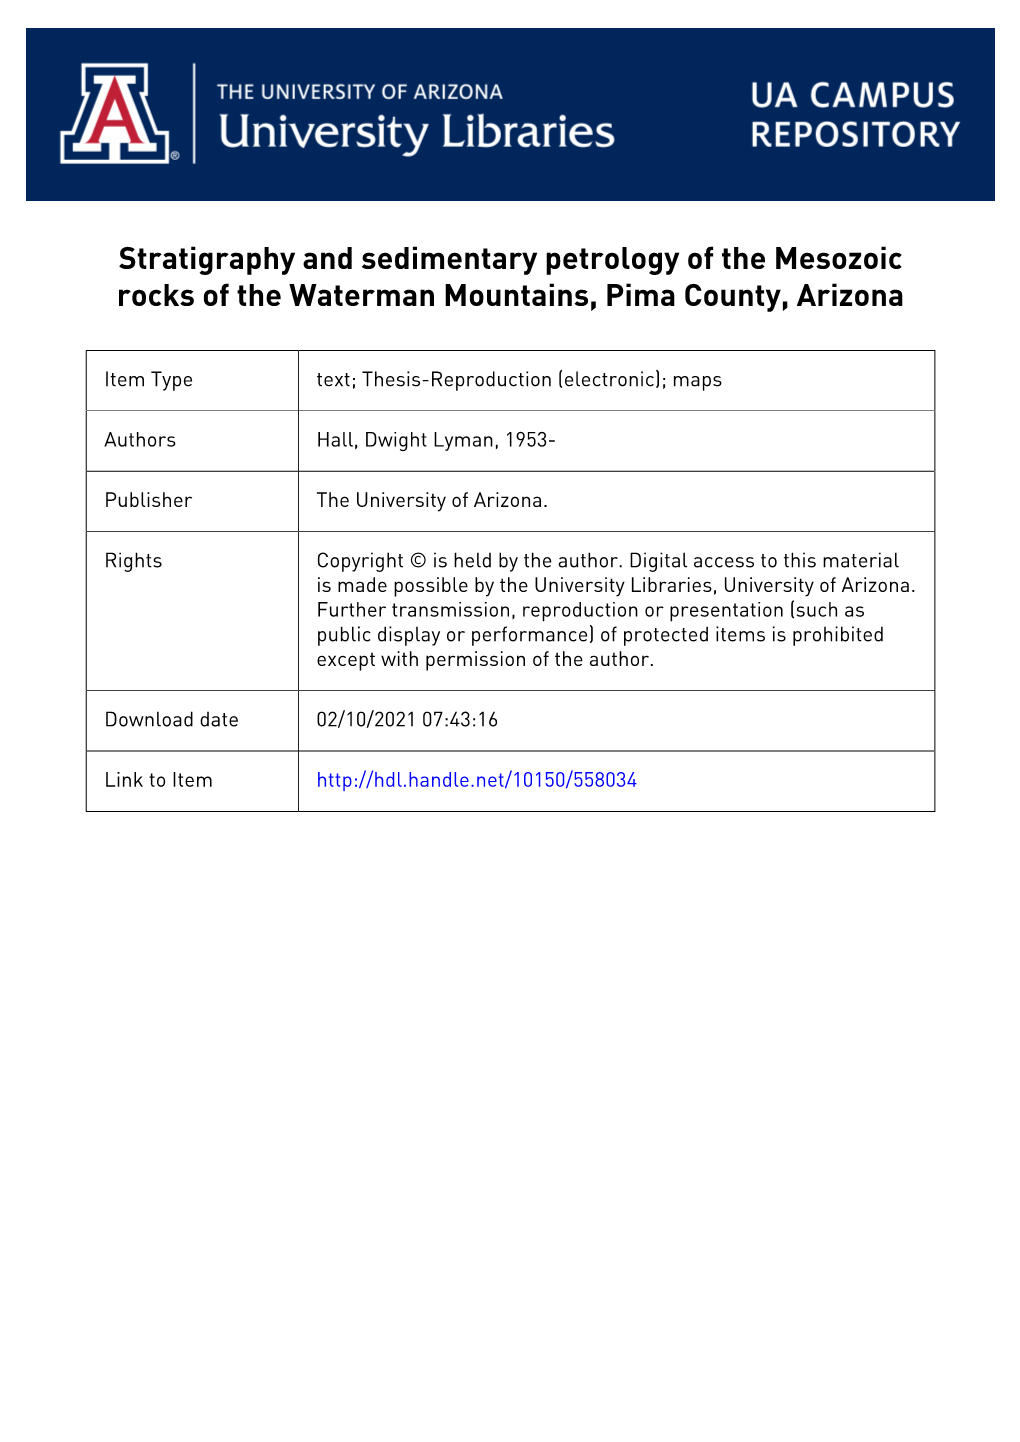 Stratigraphy and Sedimentary Petrology of the Mesozoic Rocks of the Waterman Mountains, Pima County, Arizona